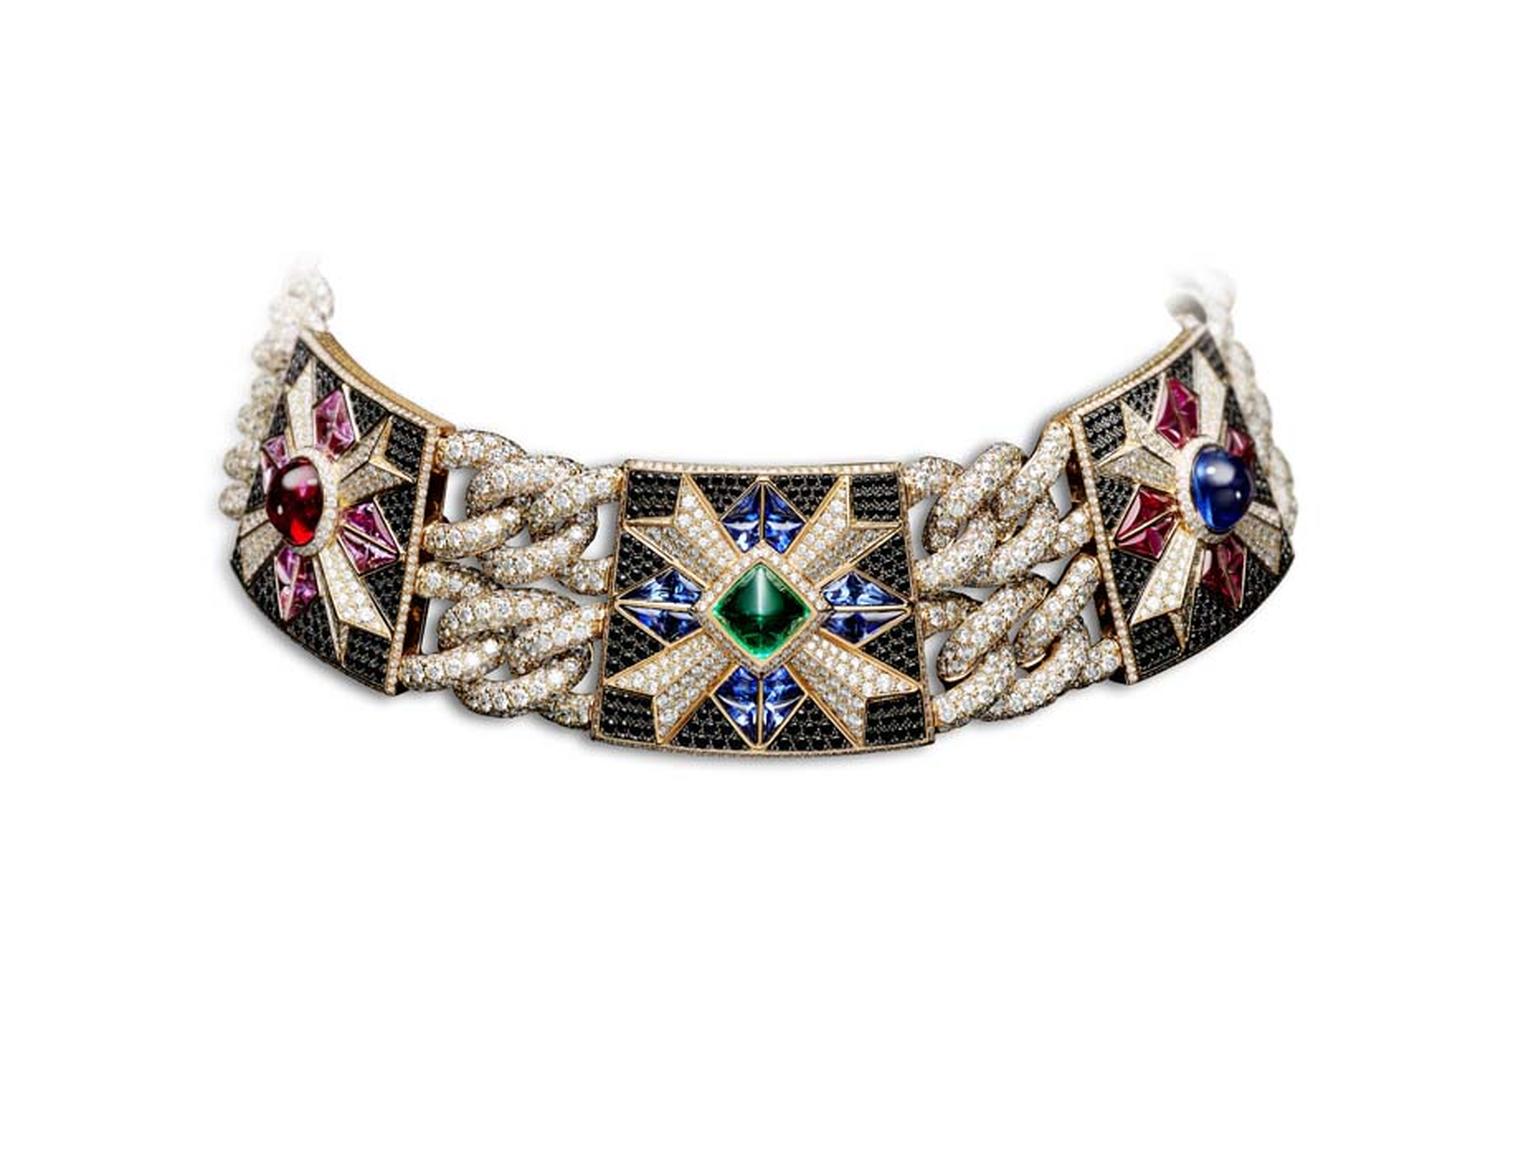 Giampiero Bodino Rosa dei Venti choker with a diamond-encrusted chain featuring coloured gemstones. Image: Laziz Hamani.